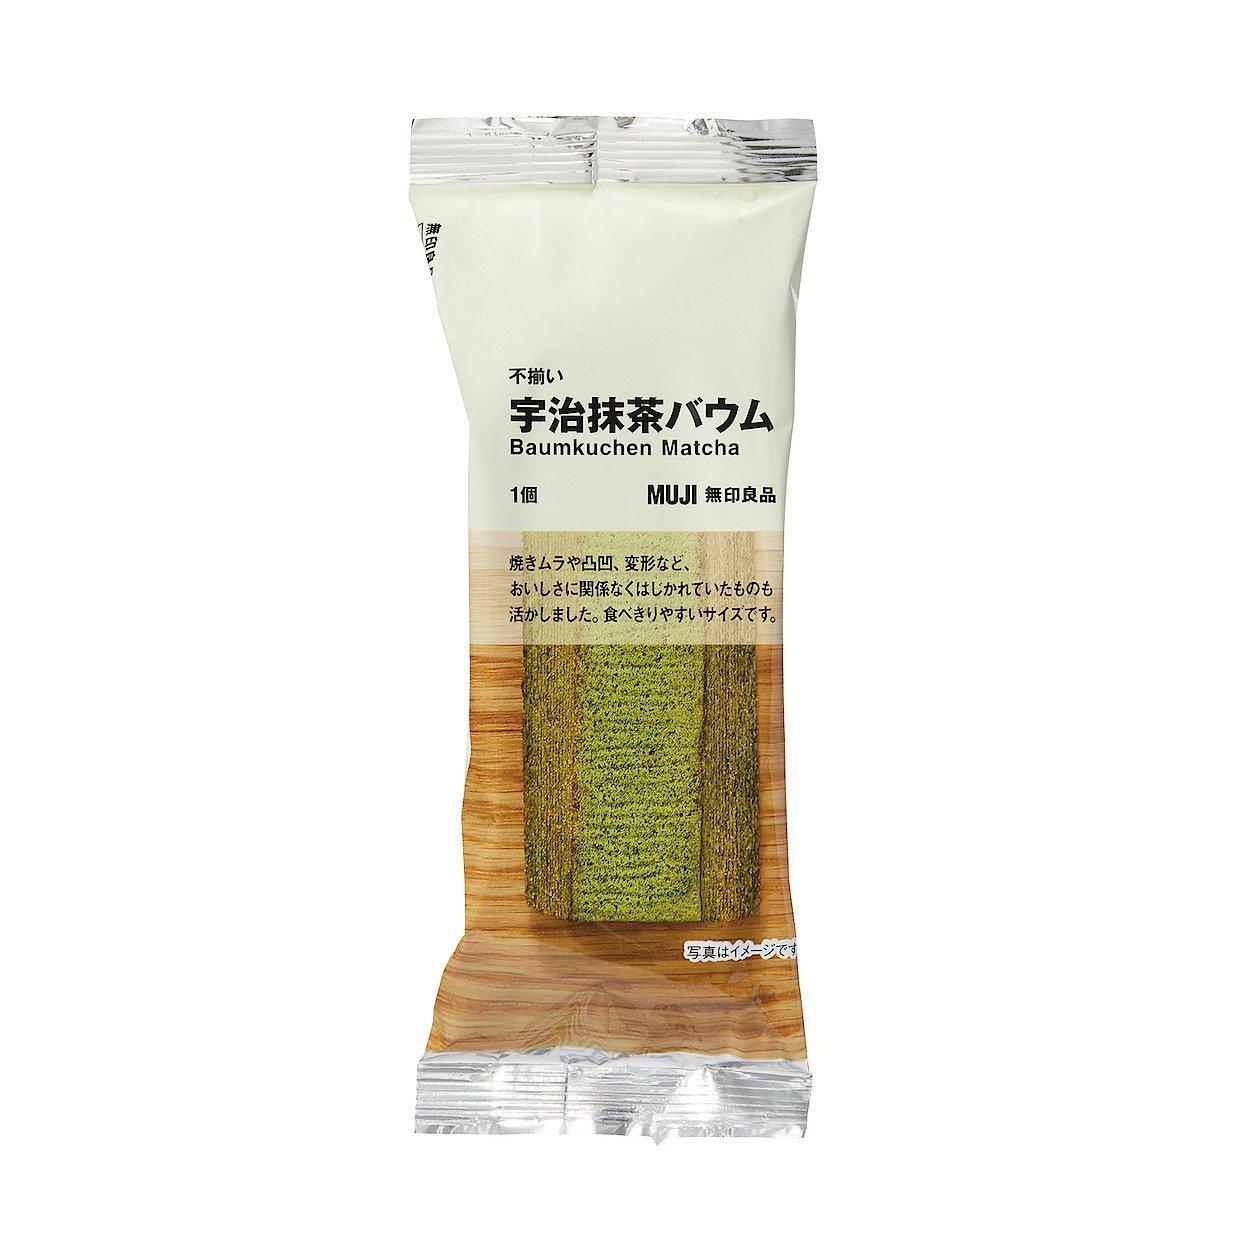 Muji Baumkuchen Matcha Green Tea Sponge Cake (Pack of 3), Japanese Taste